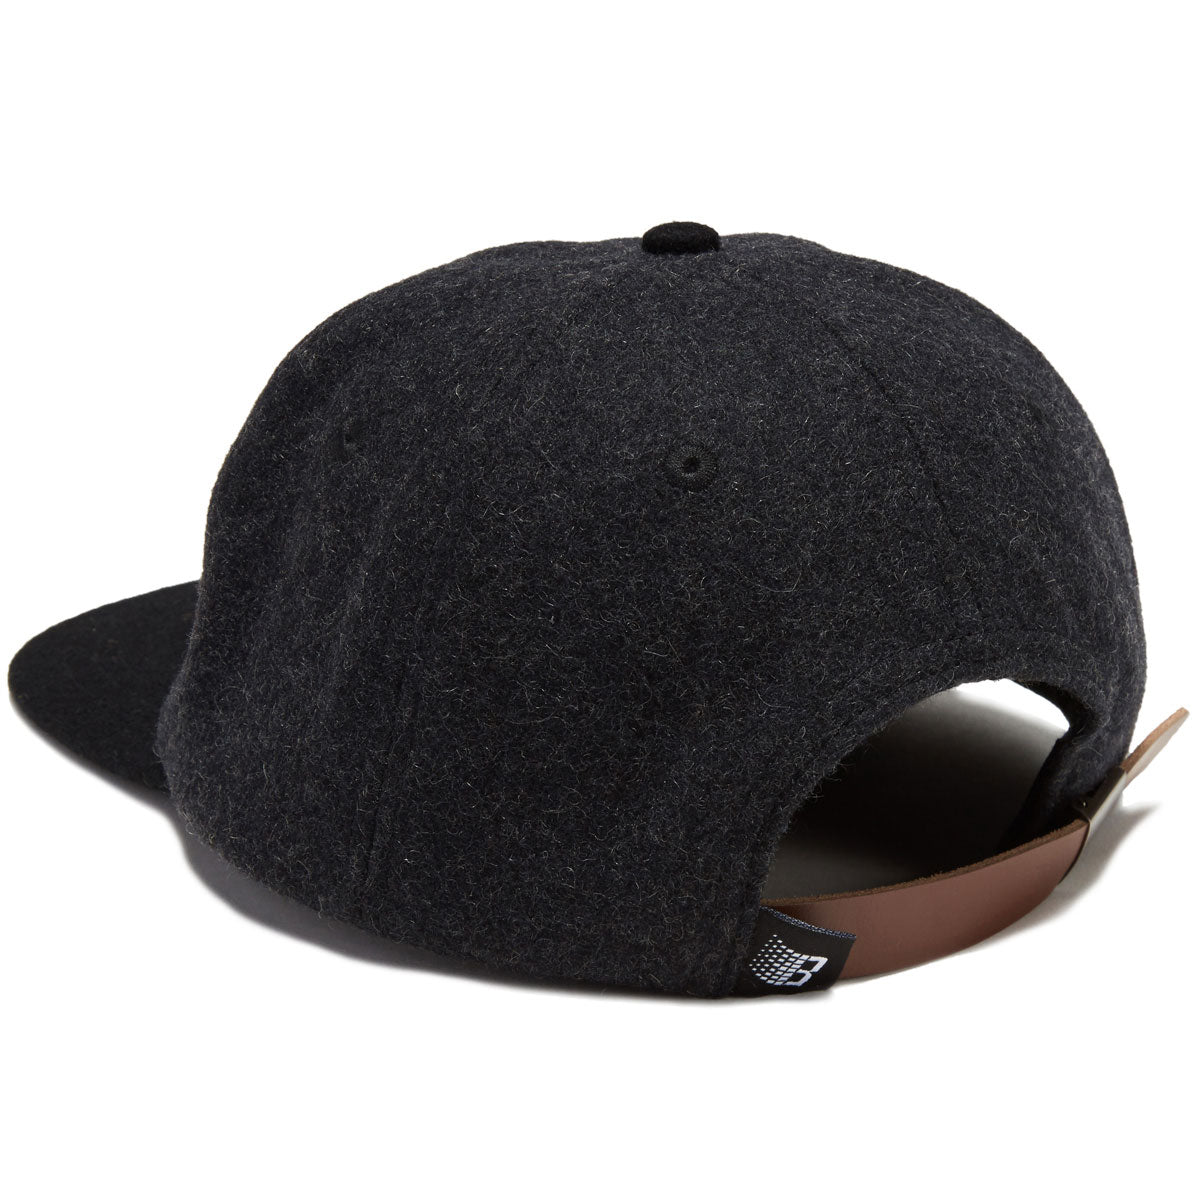 Bronze 56k Xlb Wool Hat - Black image 2